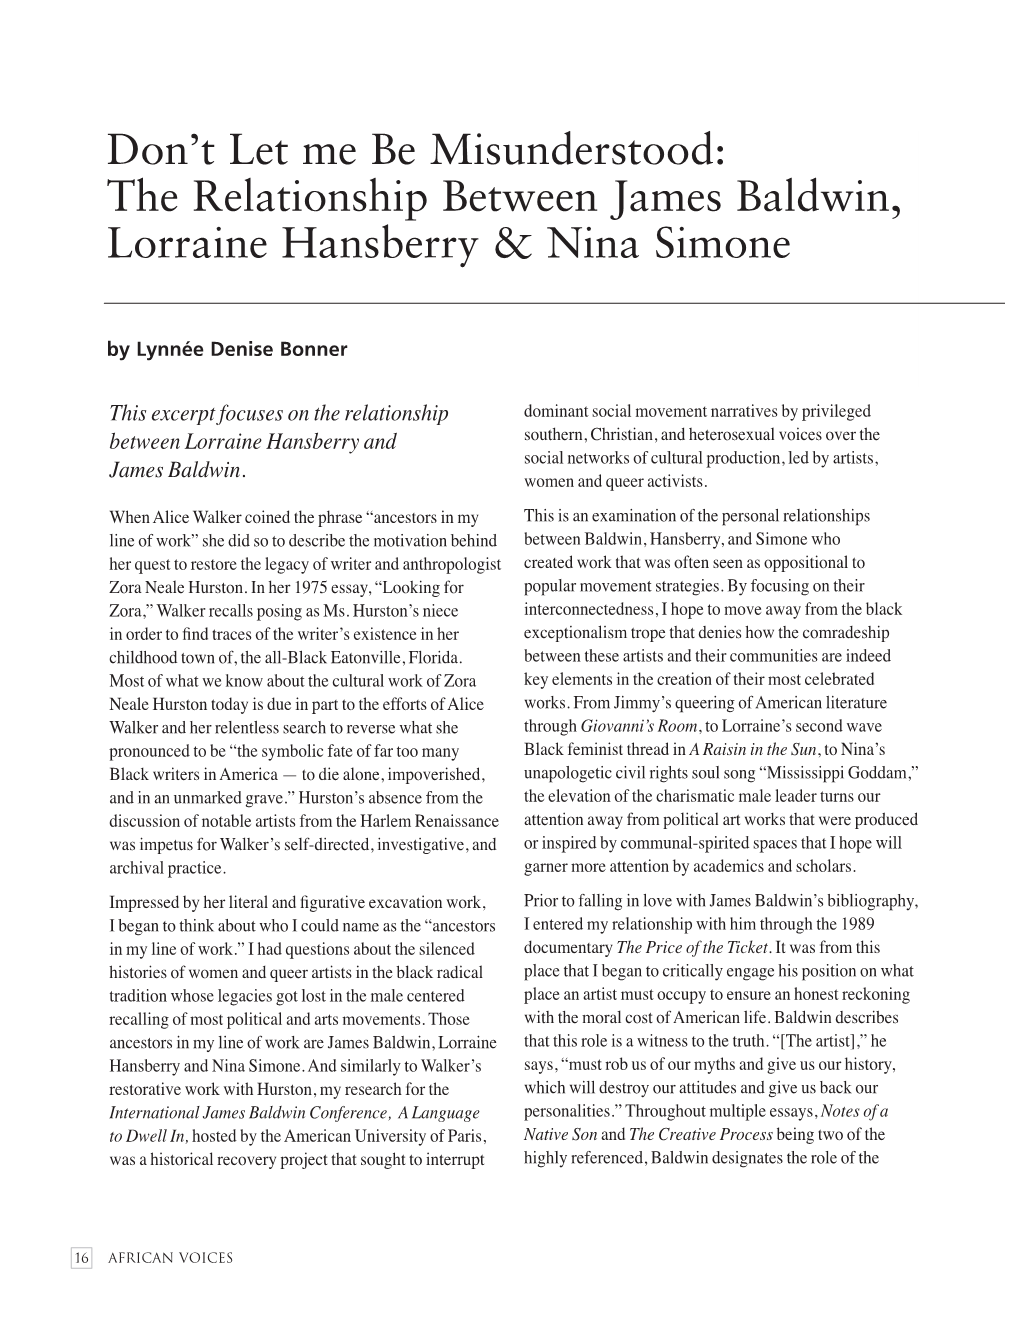 Don't Let Me Be Misunderstood: the Relationship Between James Baldwin, Lorraine Hansberry & Nina Simone